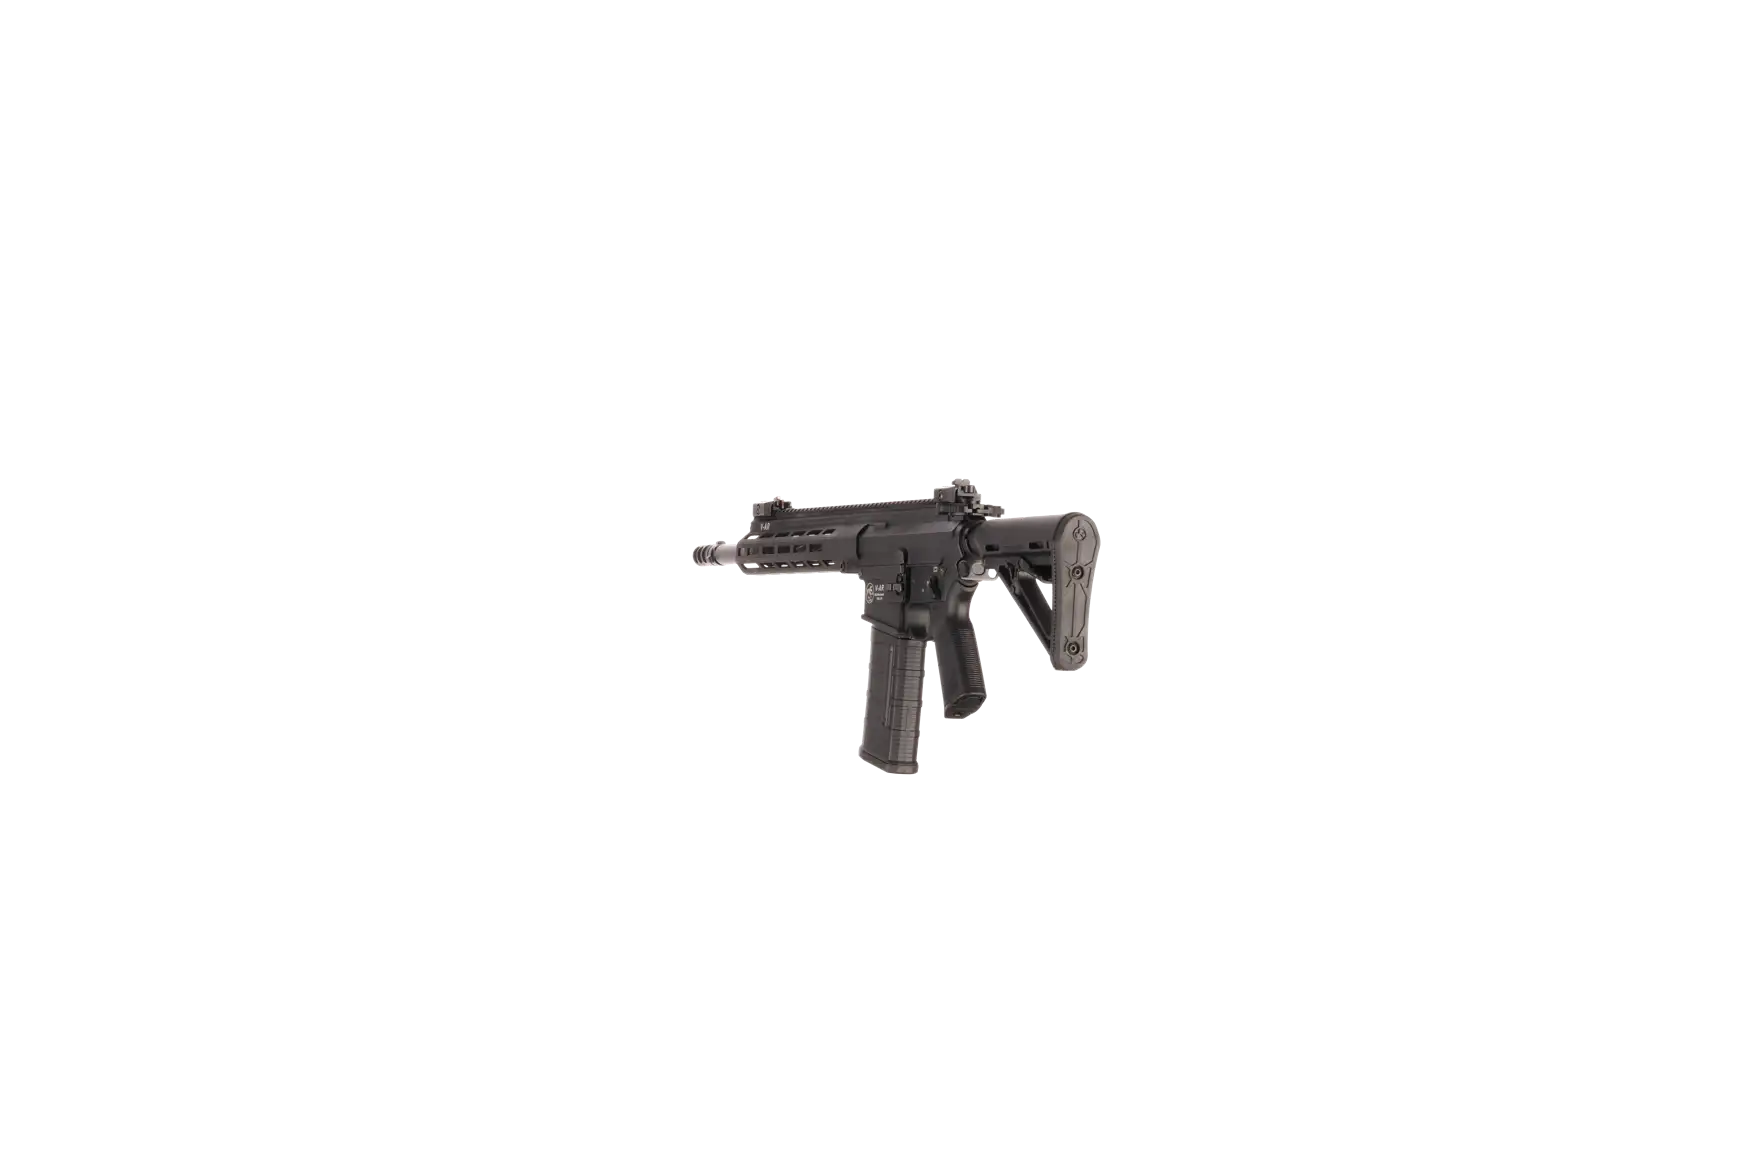 Náhledový obrázek pušky V-AR 762 x 45mm SPINVIEW 1 R49